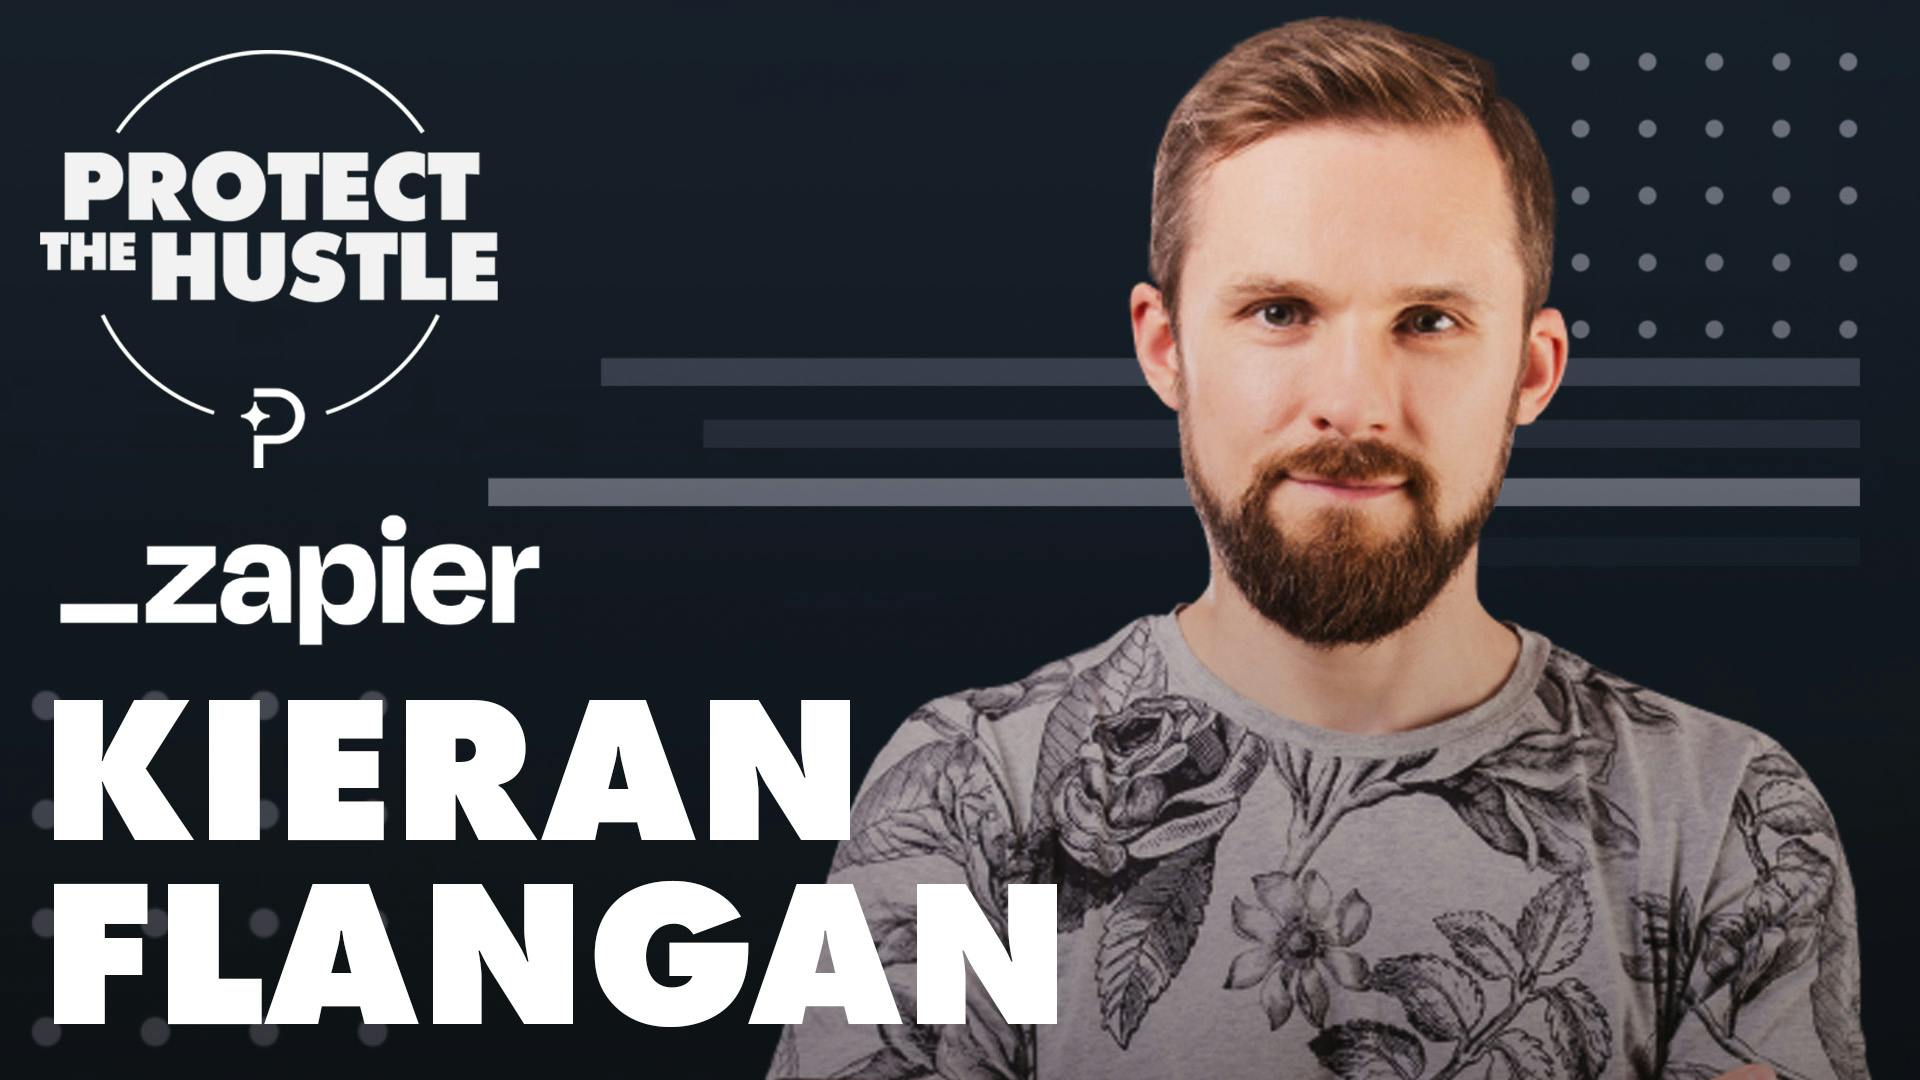 Protect the Hustle Thumbnail featuring Zapier's Kieran Flanagan